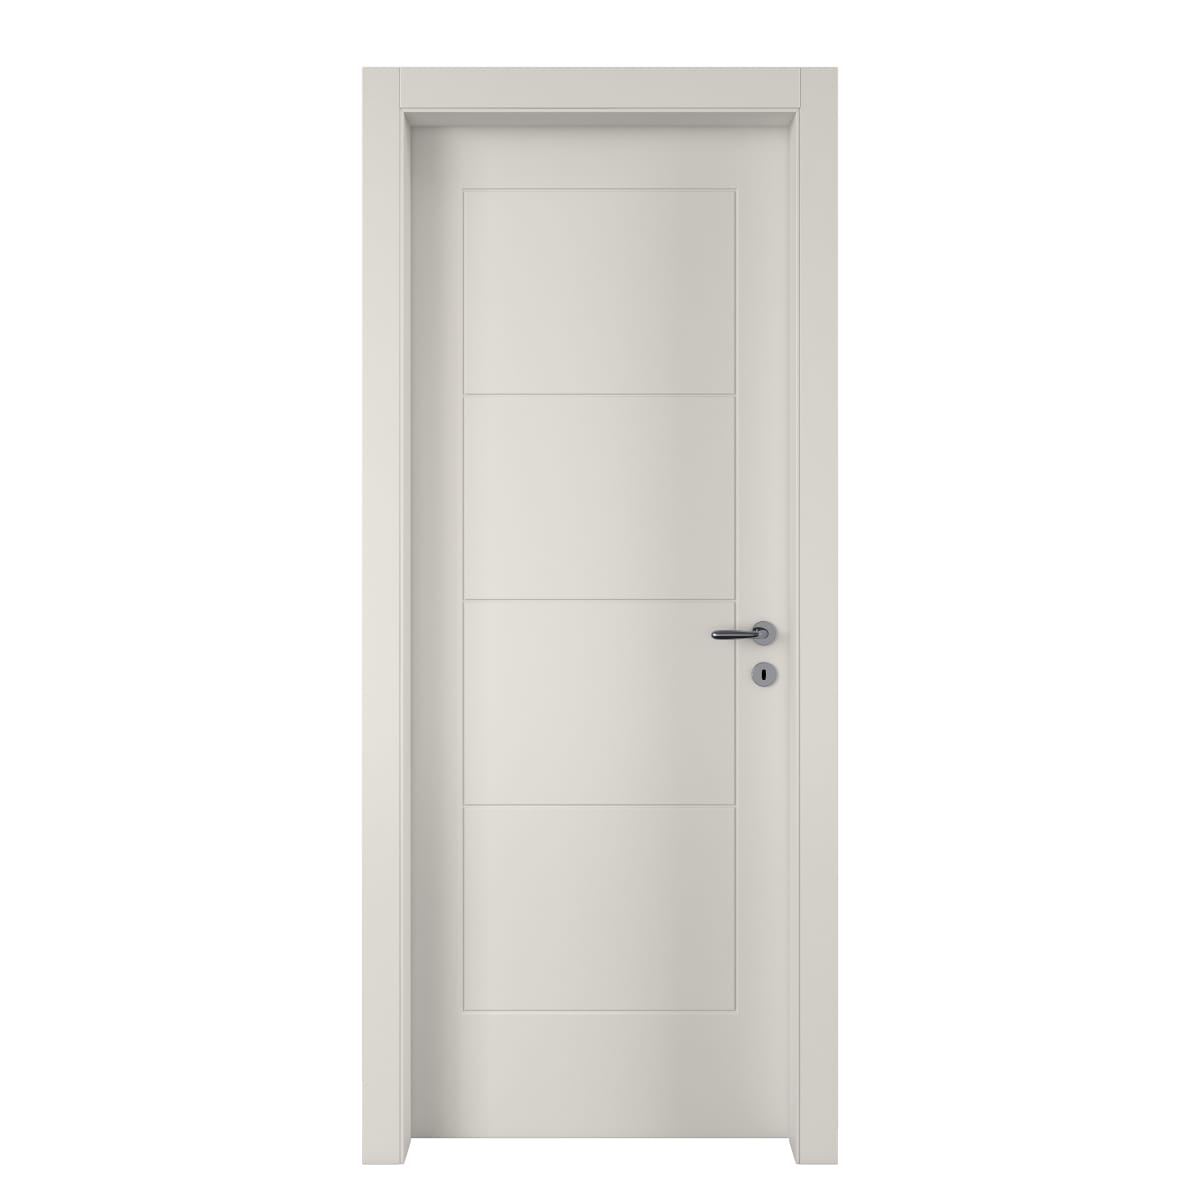 WHITE RIBERA DOOR 80X210 LEFT